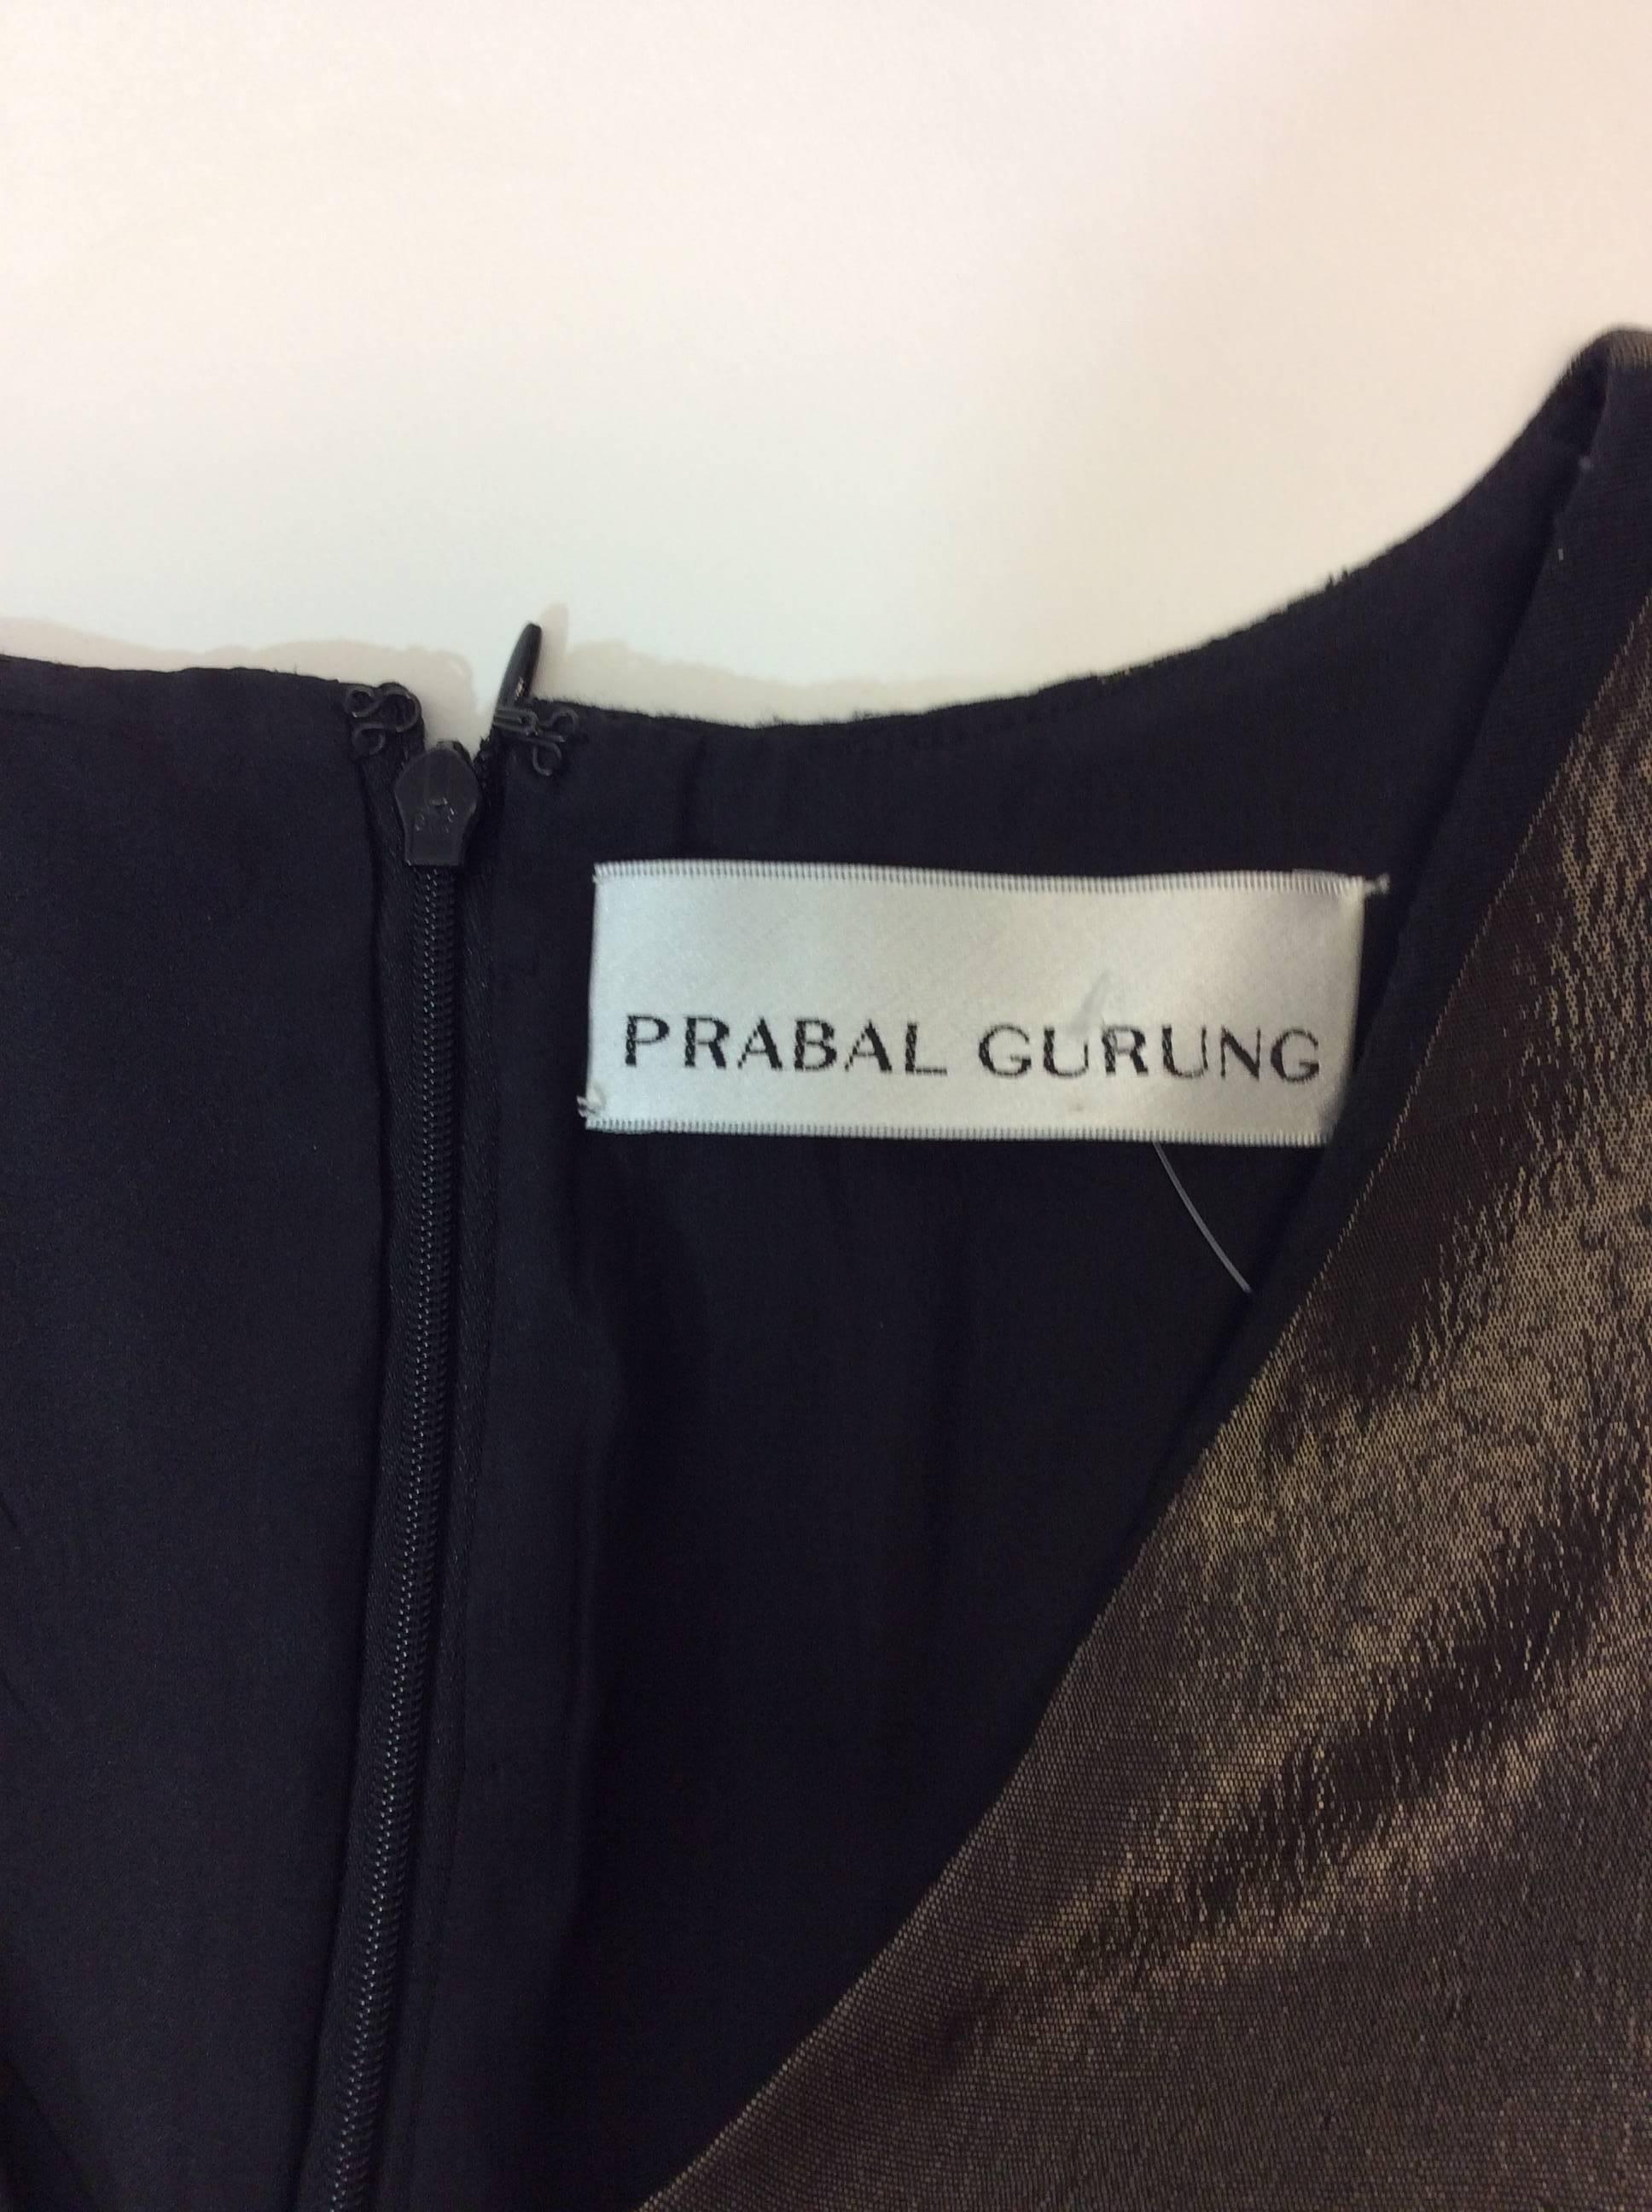 Prabal Gurung Black and Gold Metallic Geometric Dress For Sale 2